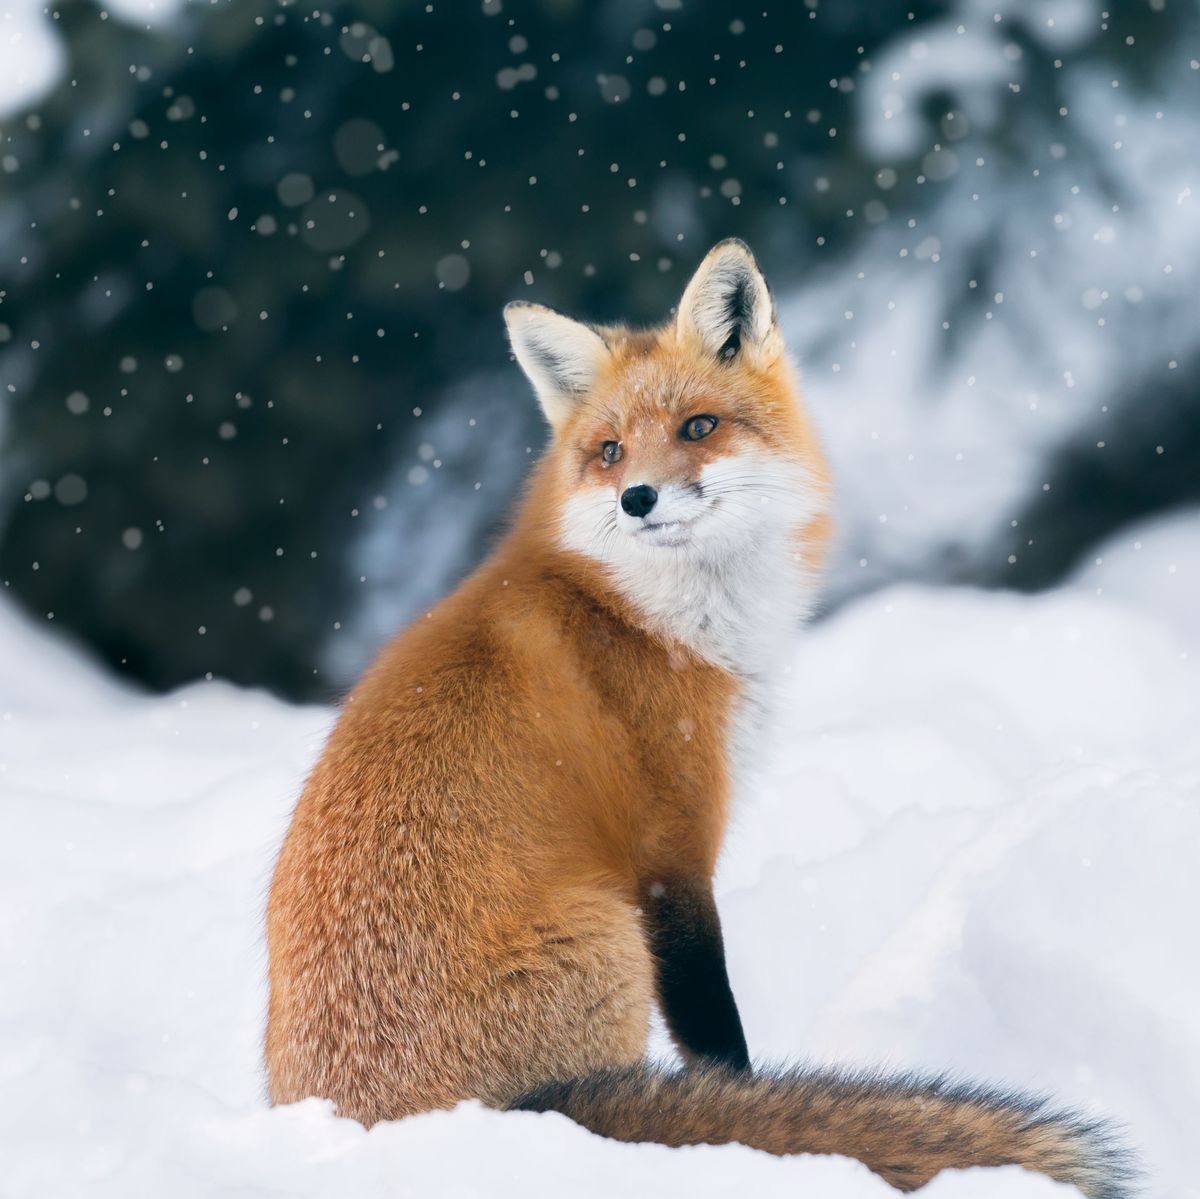 Cutest photos of animals in snow